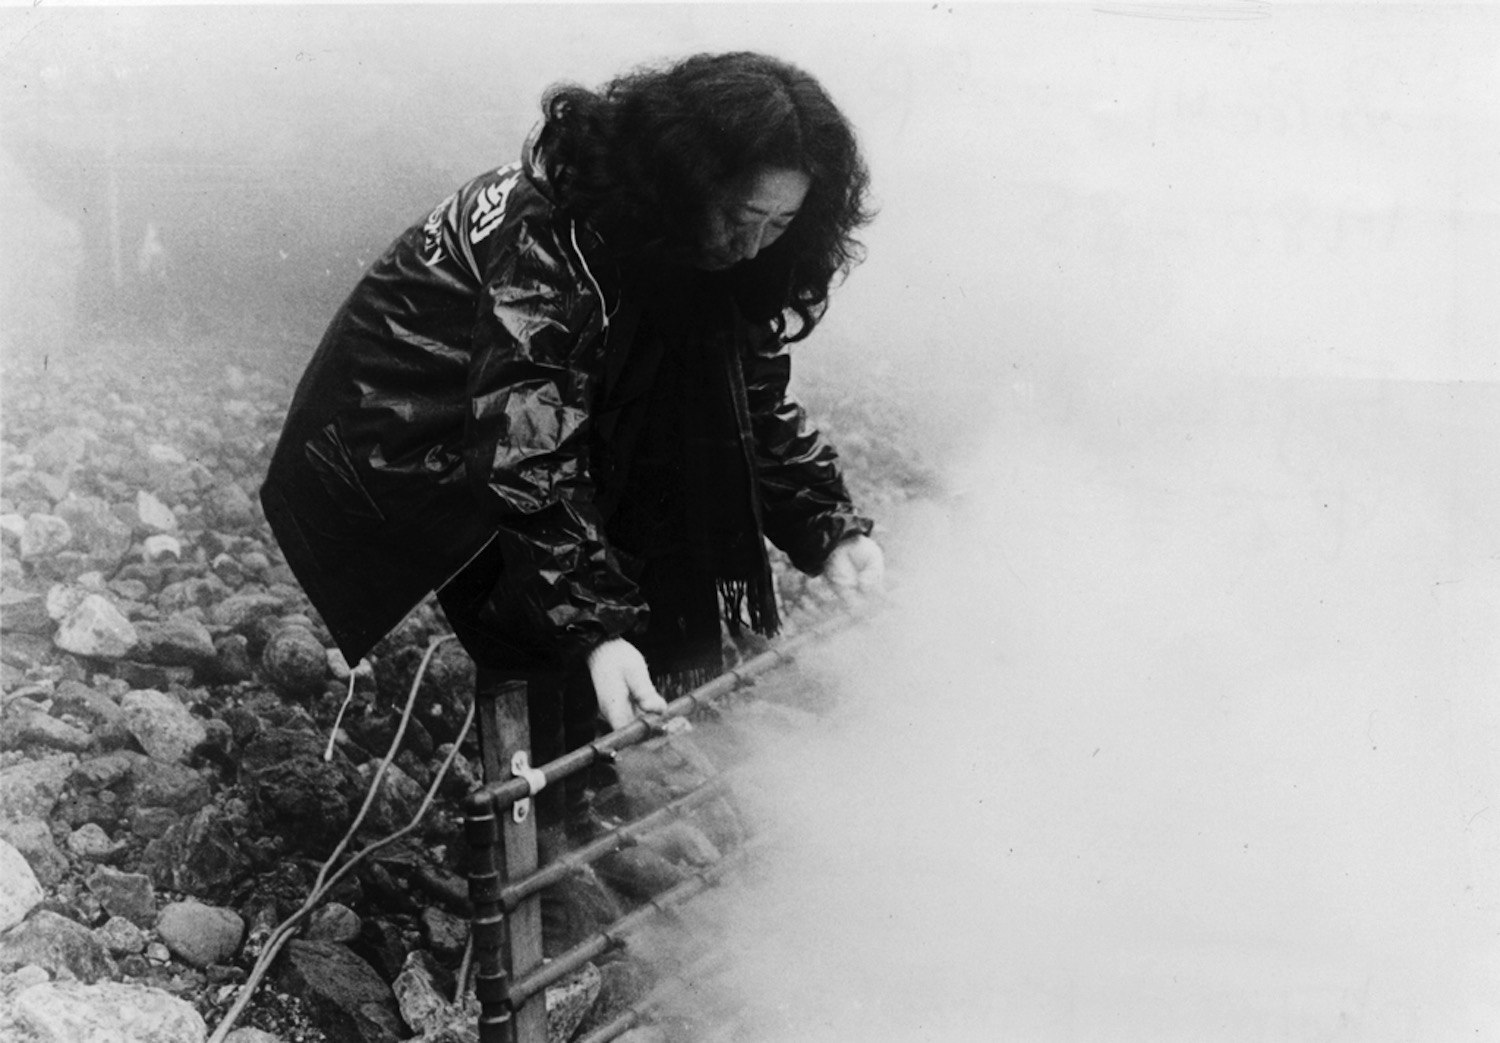 Fujiko Nakaya with fog nozzles, Ojika River, Japan, collaboration with Bill Viola, 1980